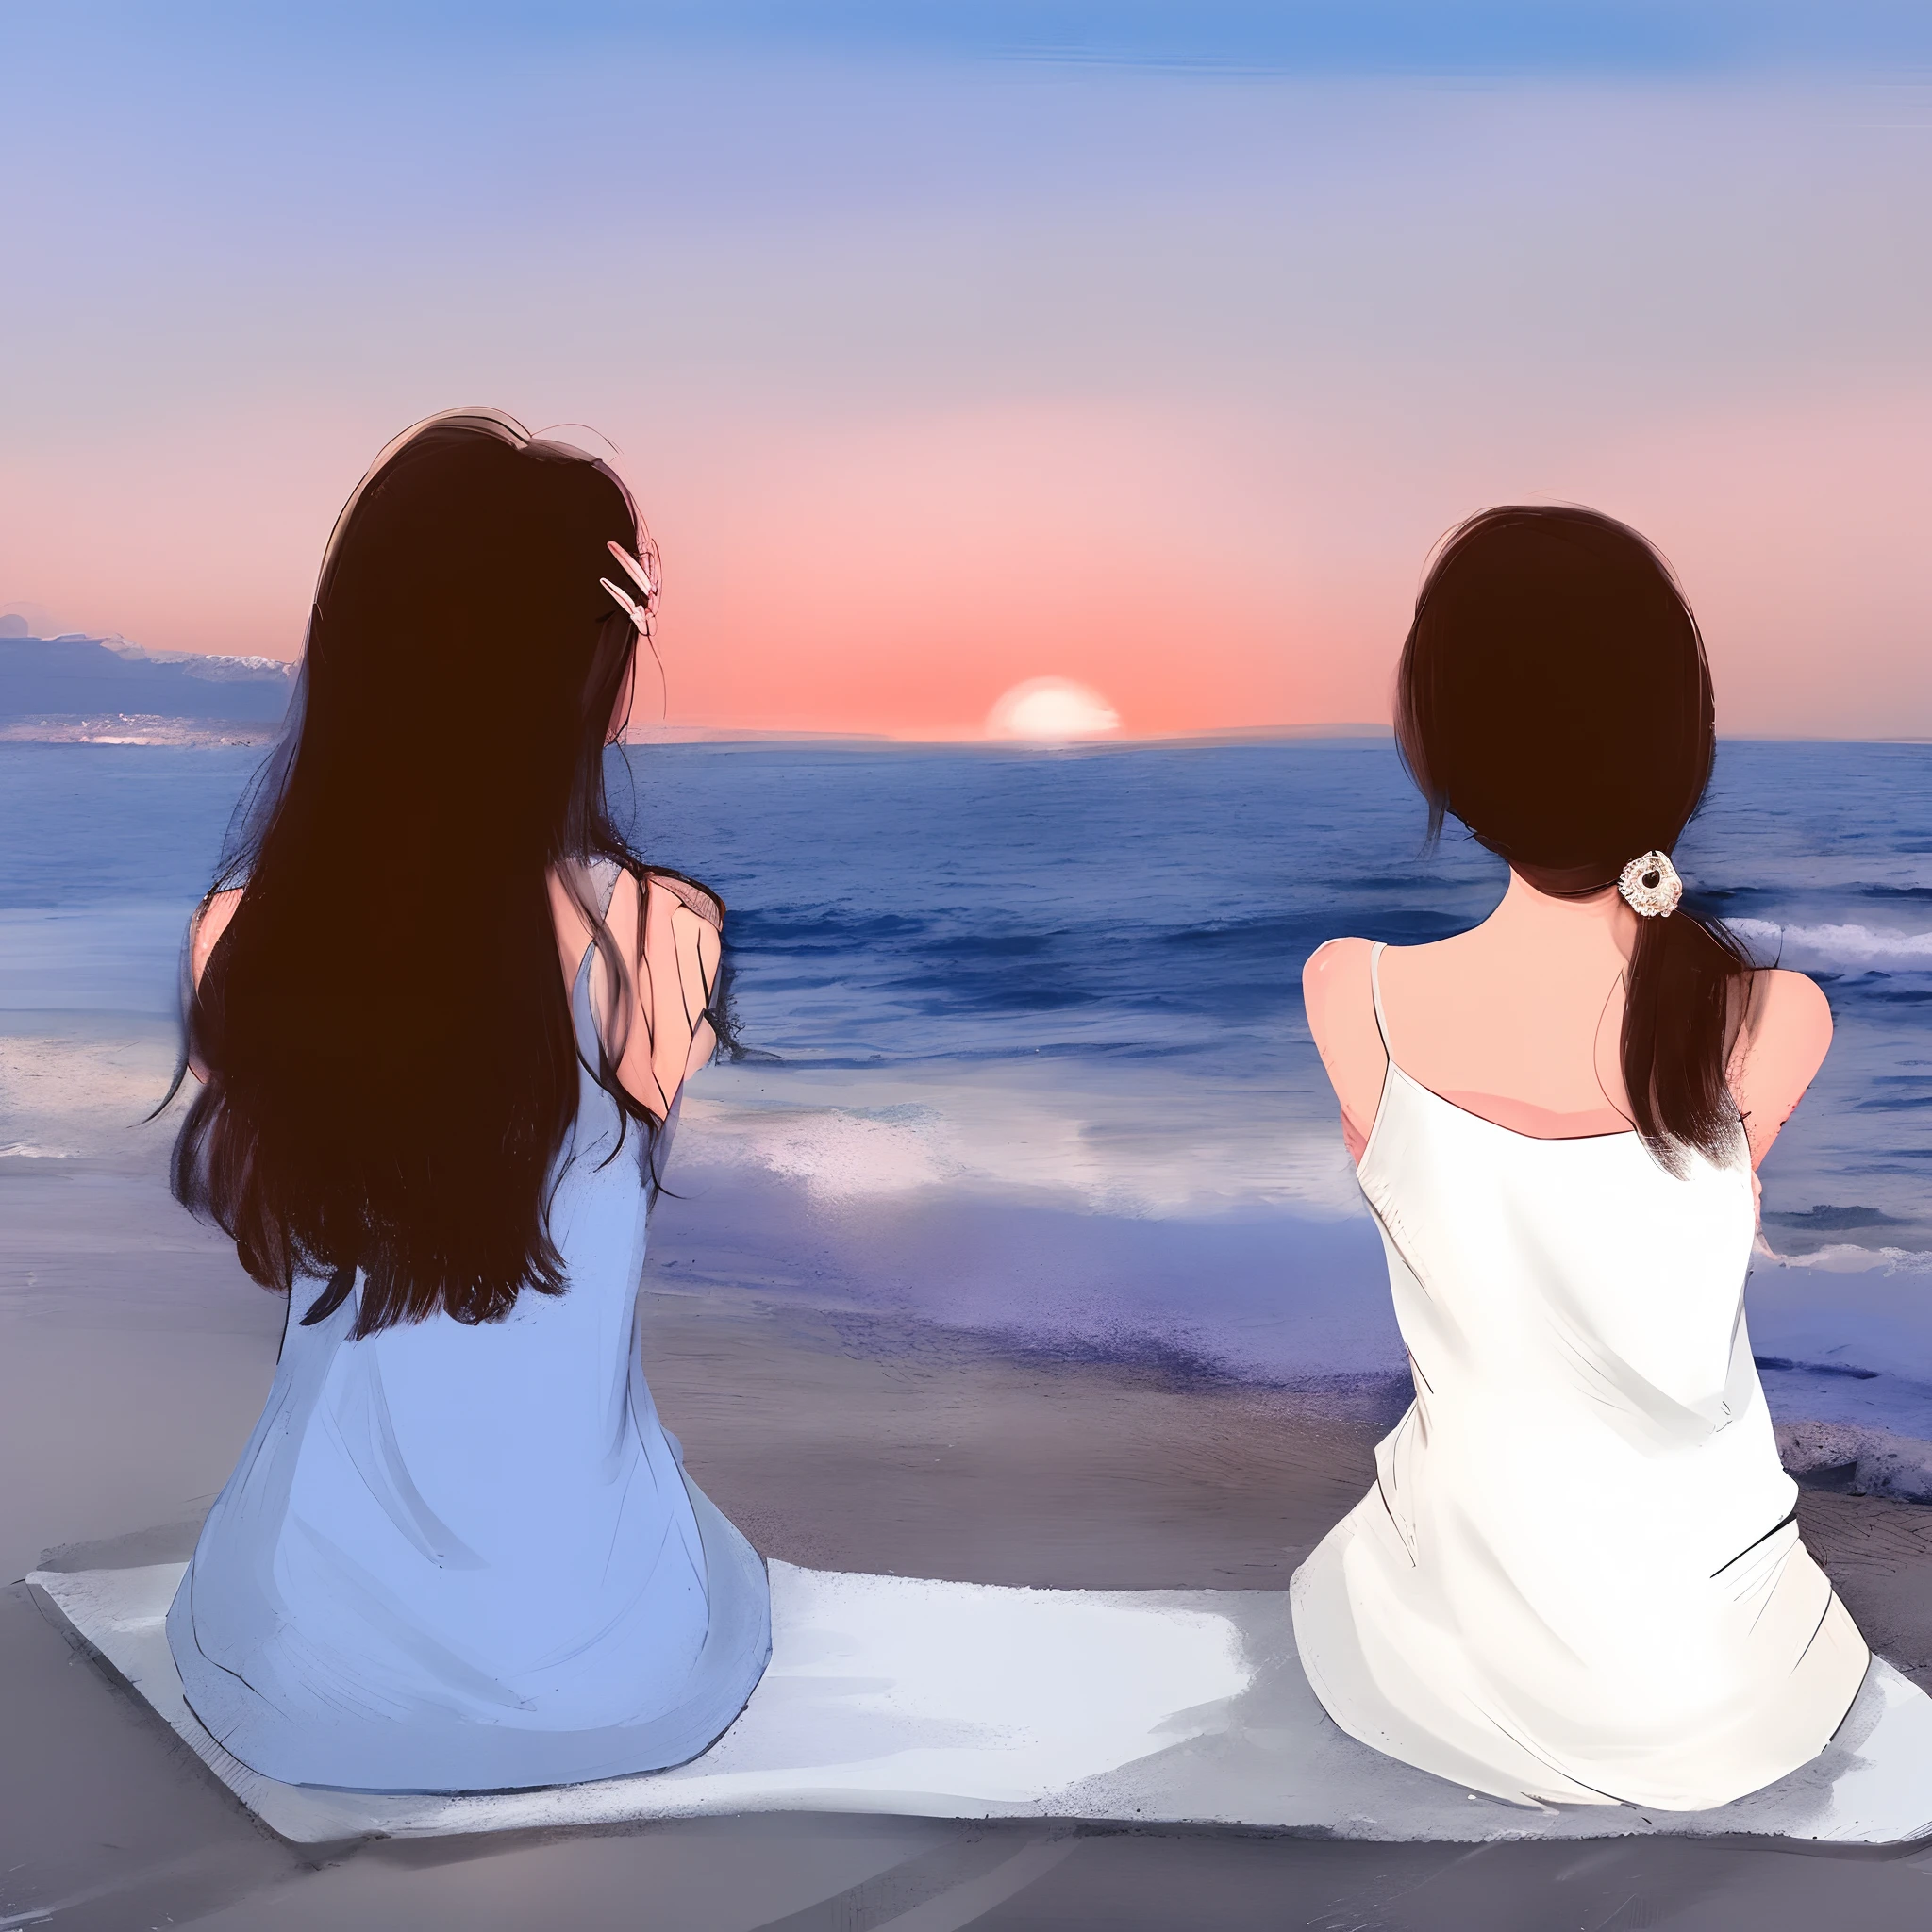 Two women sitting on the beach 看日落, 朋友的美丽绘画, 随着夕阳, 看日落, 看日落. 日本漫画, 日落时分的海滩, 在海滩上的日落, 看日落, 随着夕阳, 坐在沙滩上, 两个女孩, 日落海滩, 数字艺术图片, 日落时分的海滩